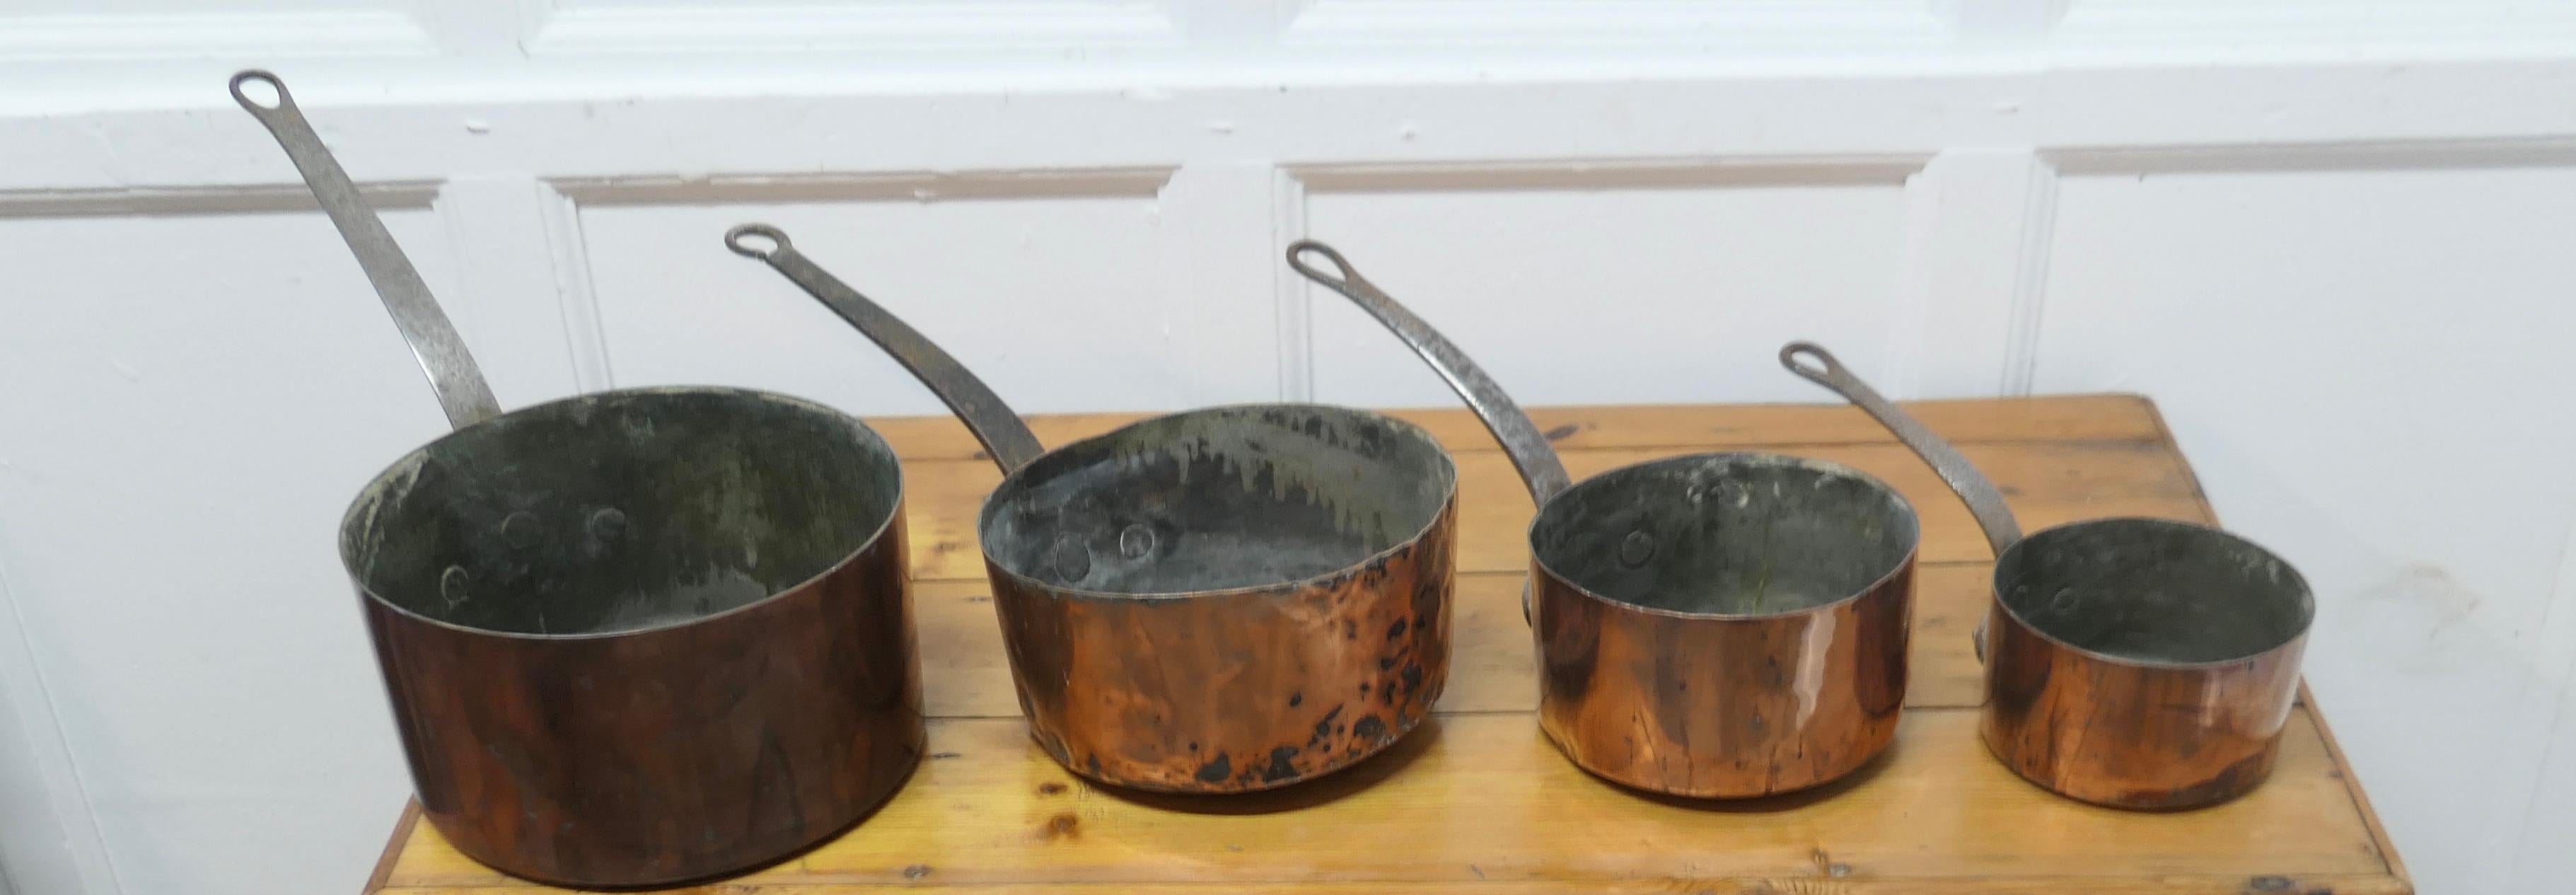 old copper pots